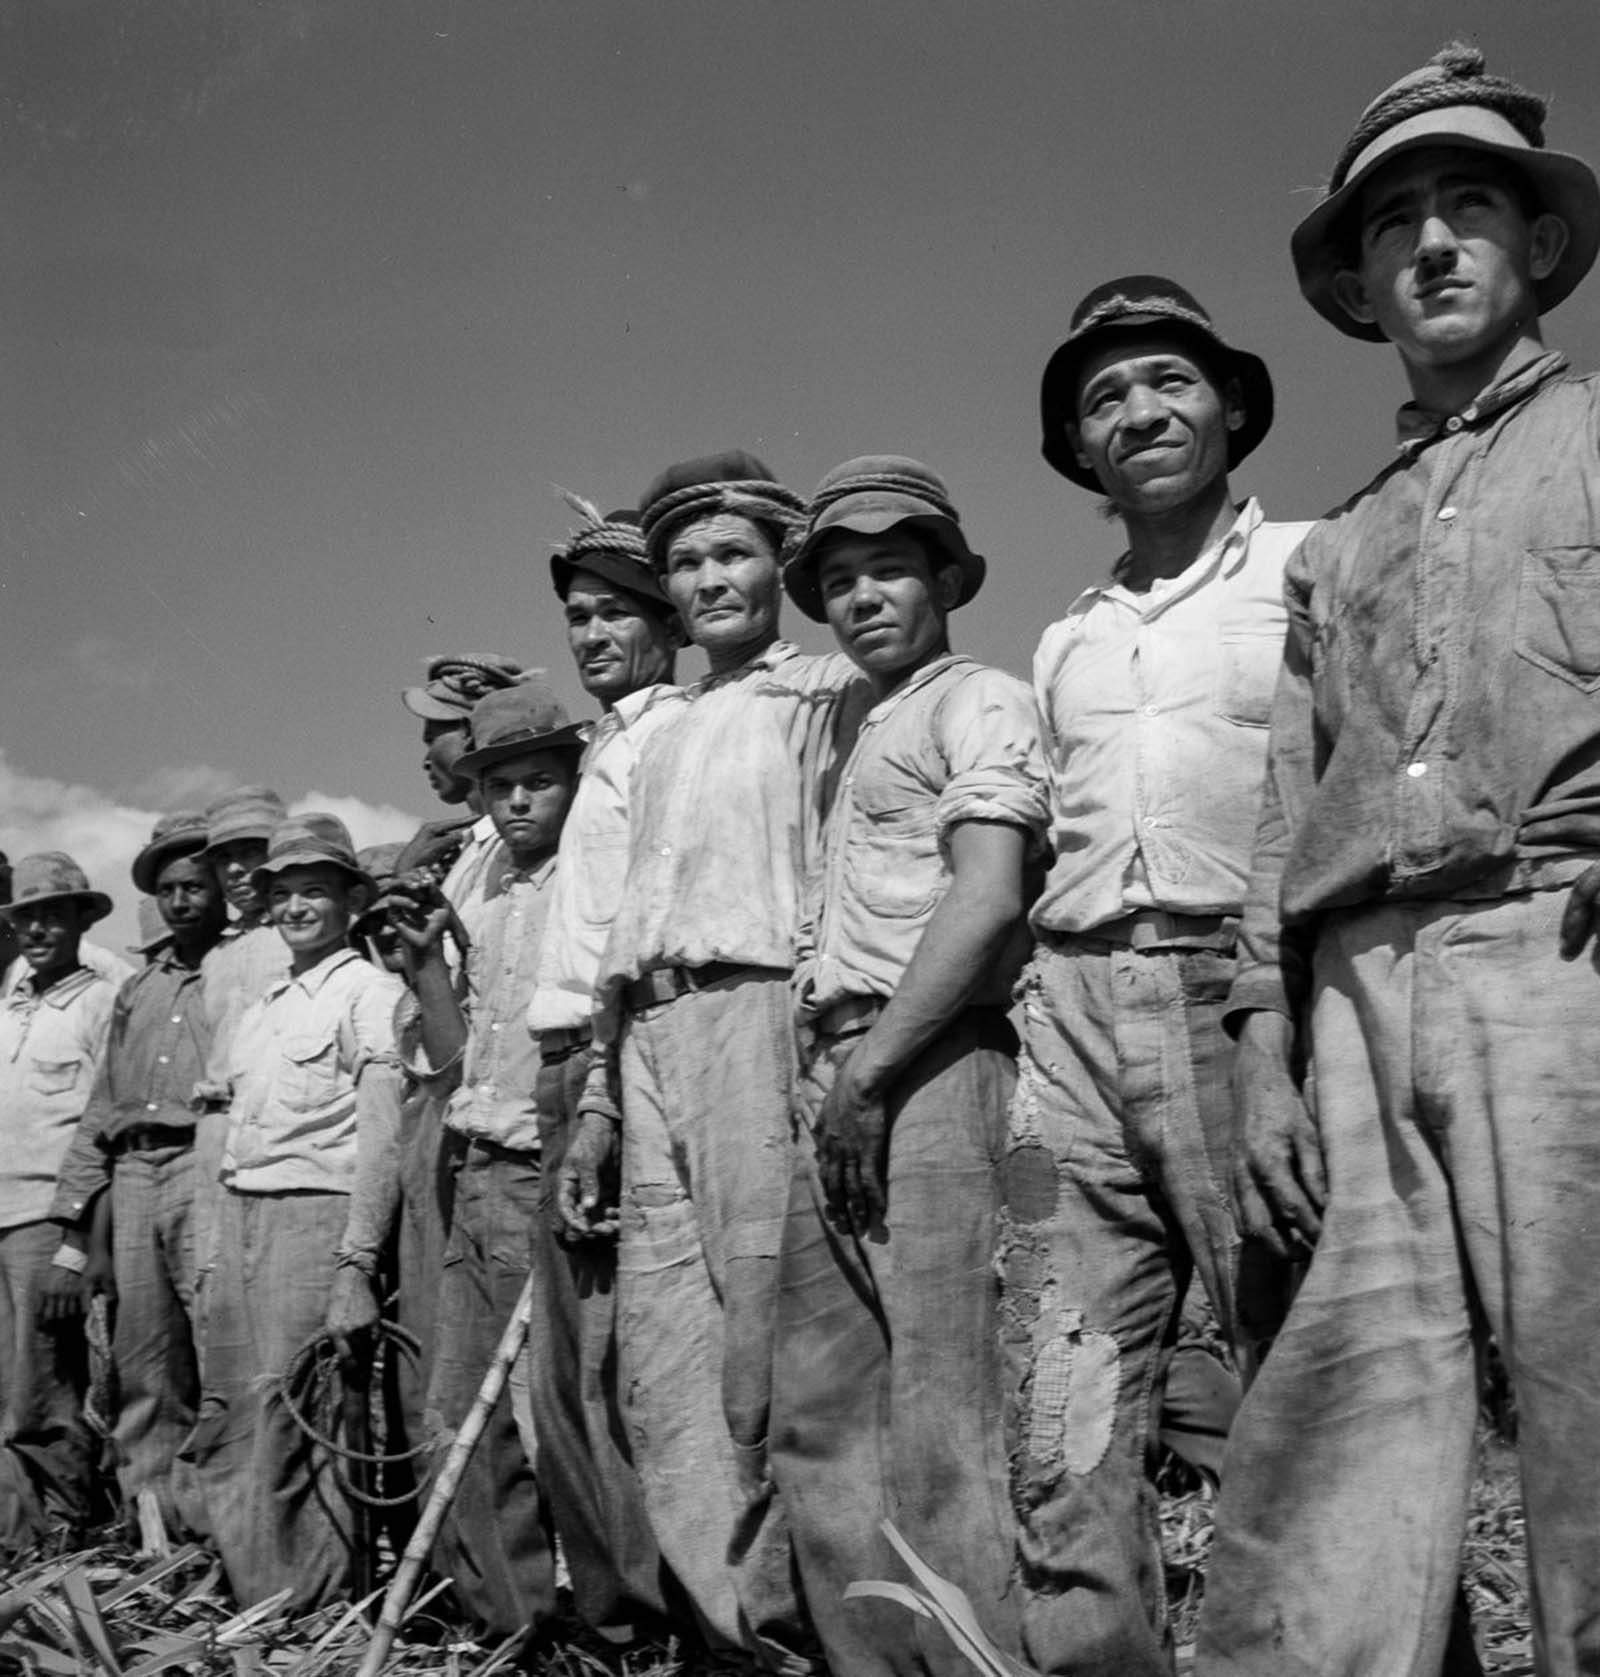 Laborers on a sugar plantation near Arecibo.